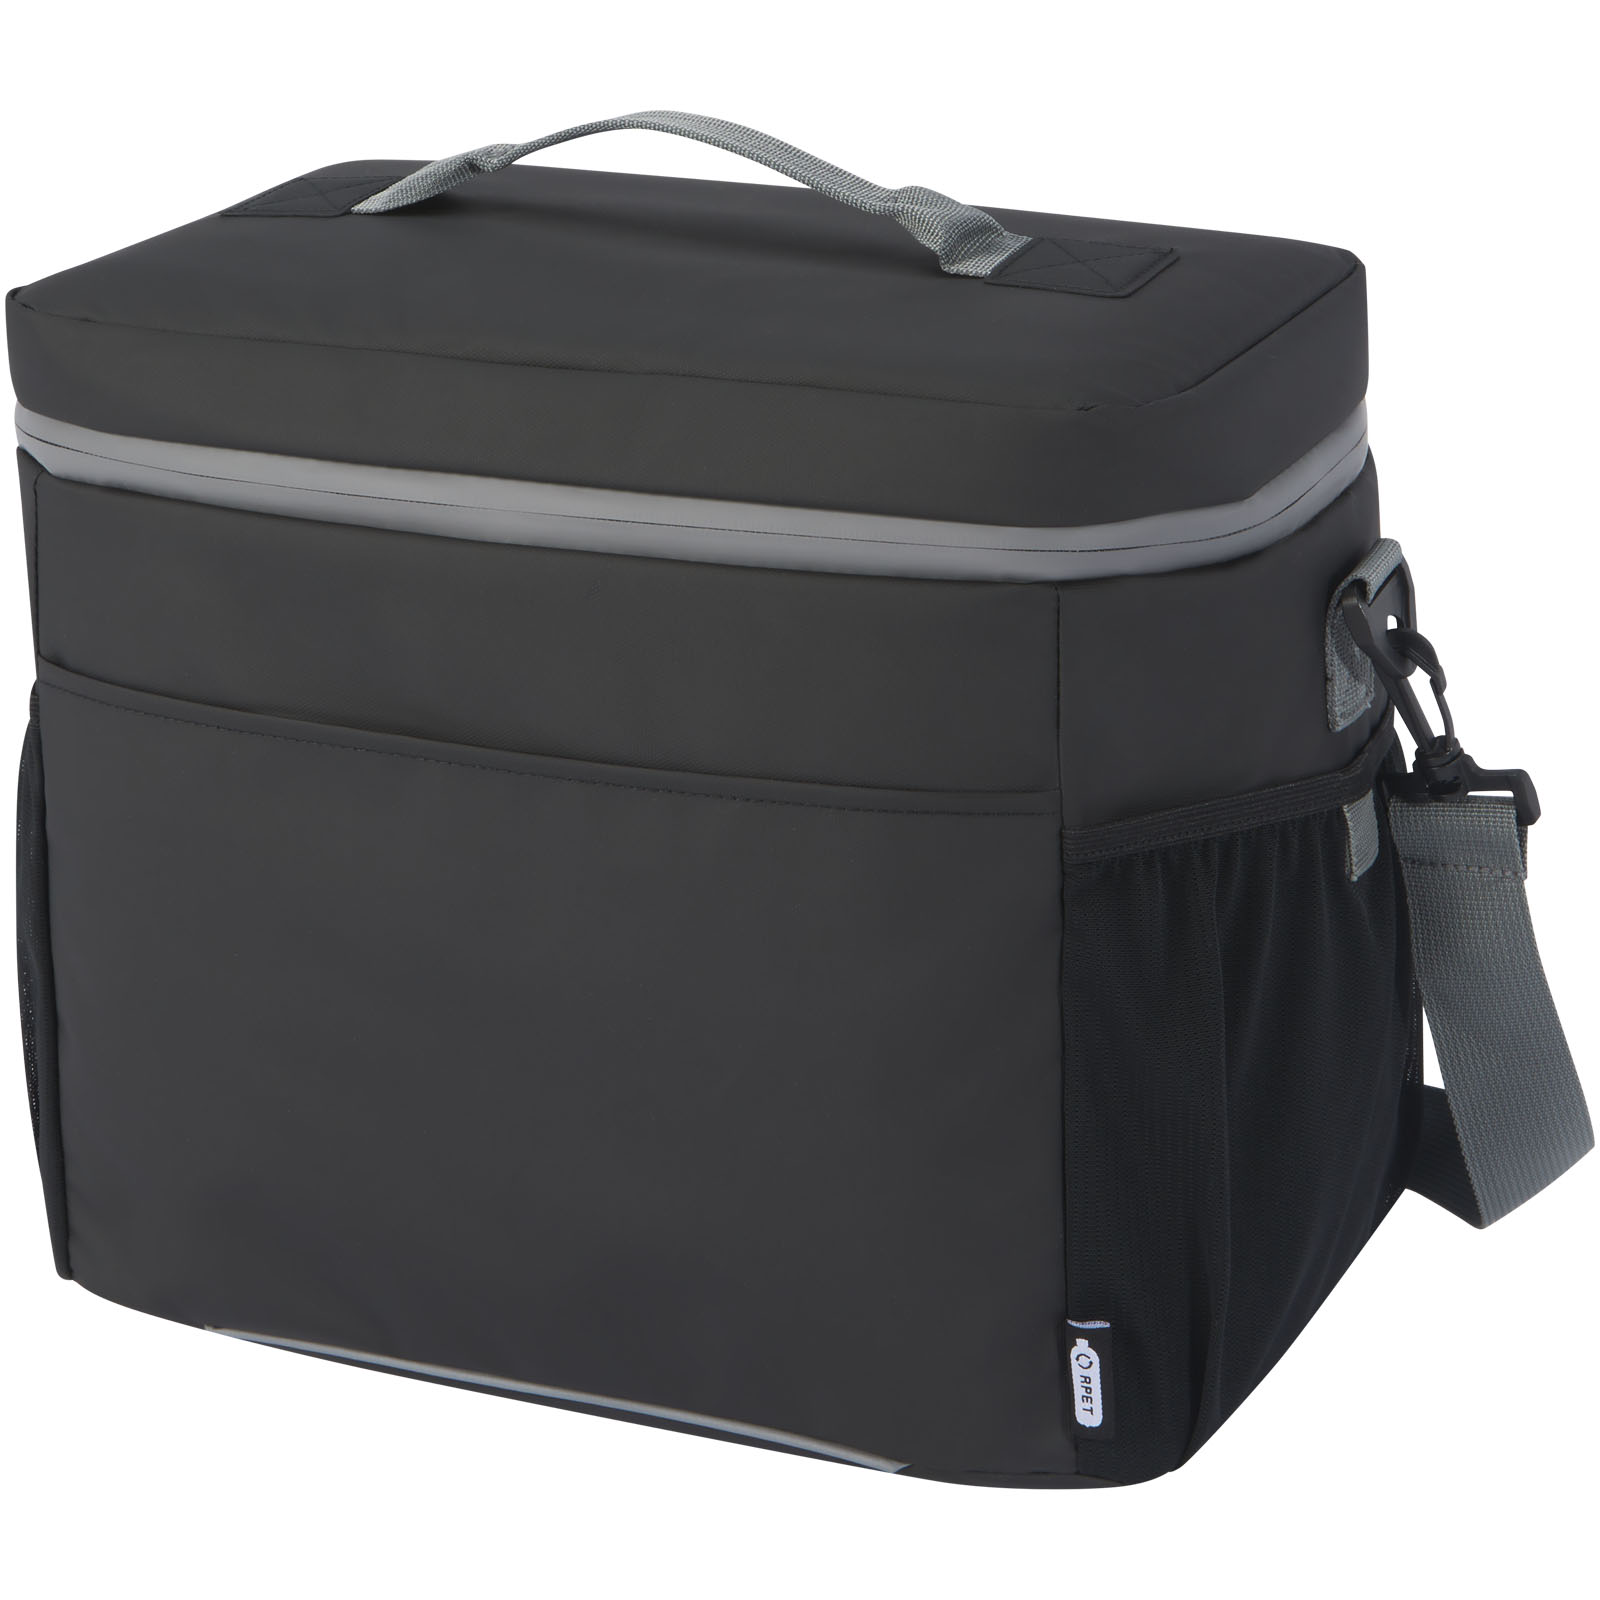 Cooler bags - Aqua 20-can GRS recycled water resistant cooler bag 22L